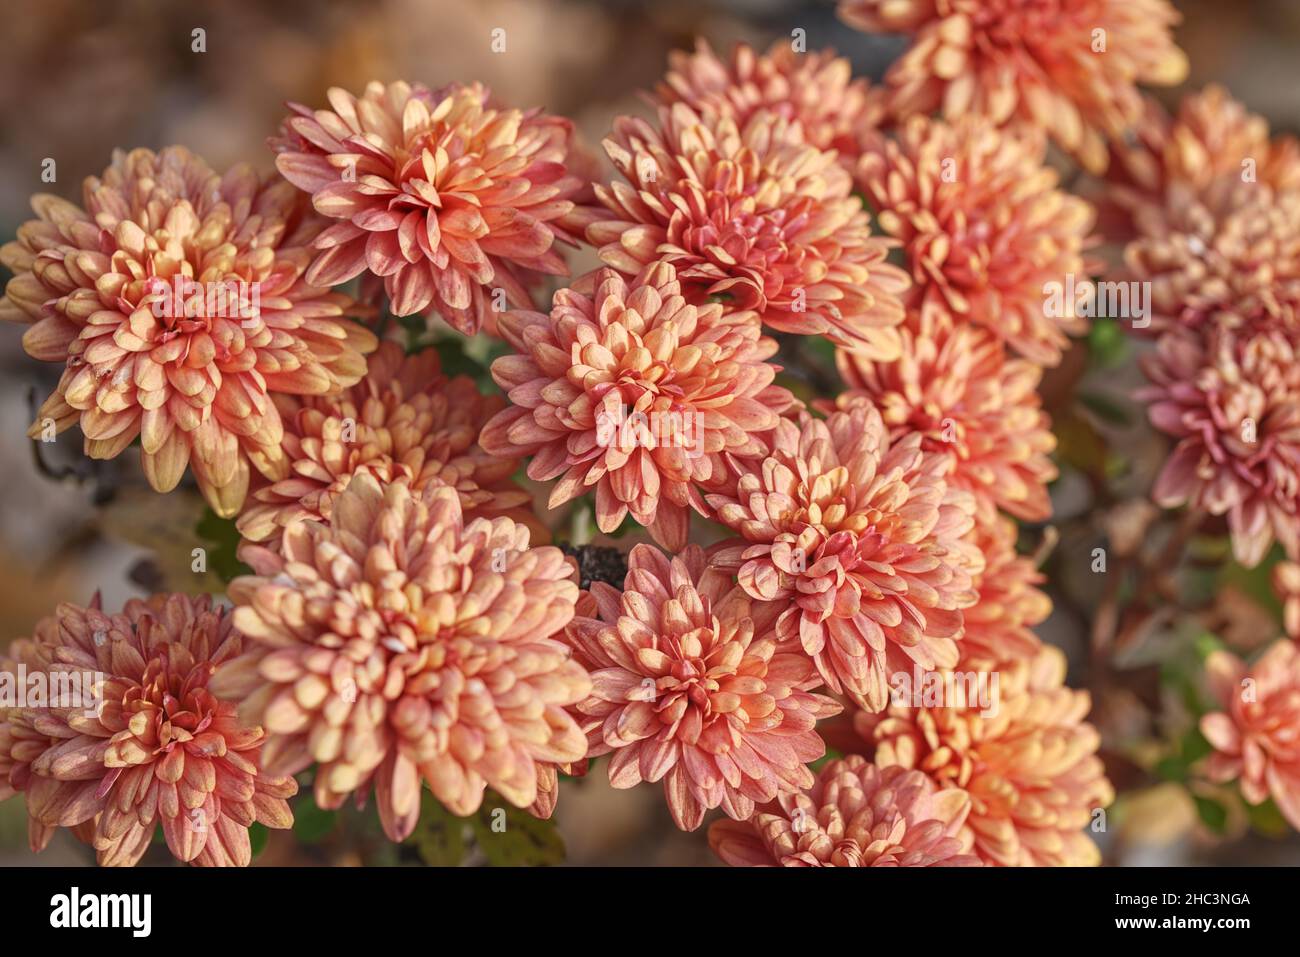 Rosa Chysanthemen - Chrysanthemum Stock Photo